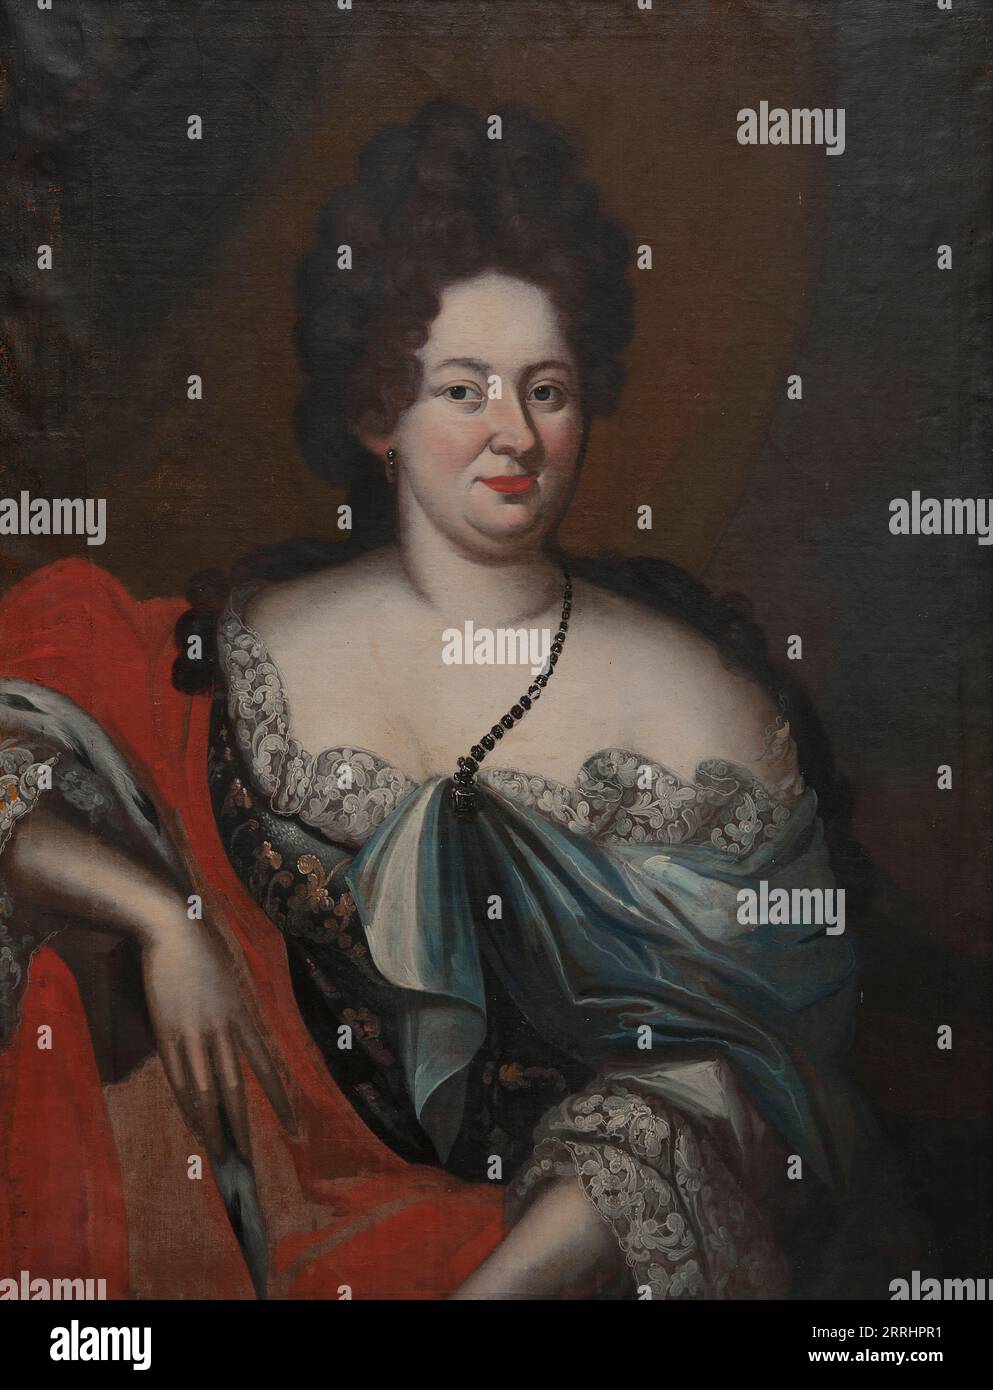 Charlotta Sofia, born 1651, princess of Courland, c17th century. Stock Photo